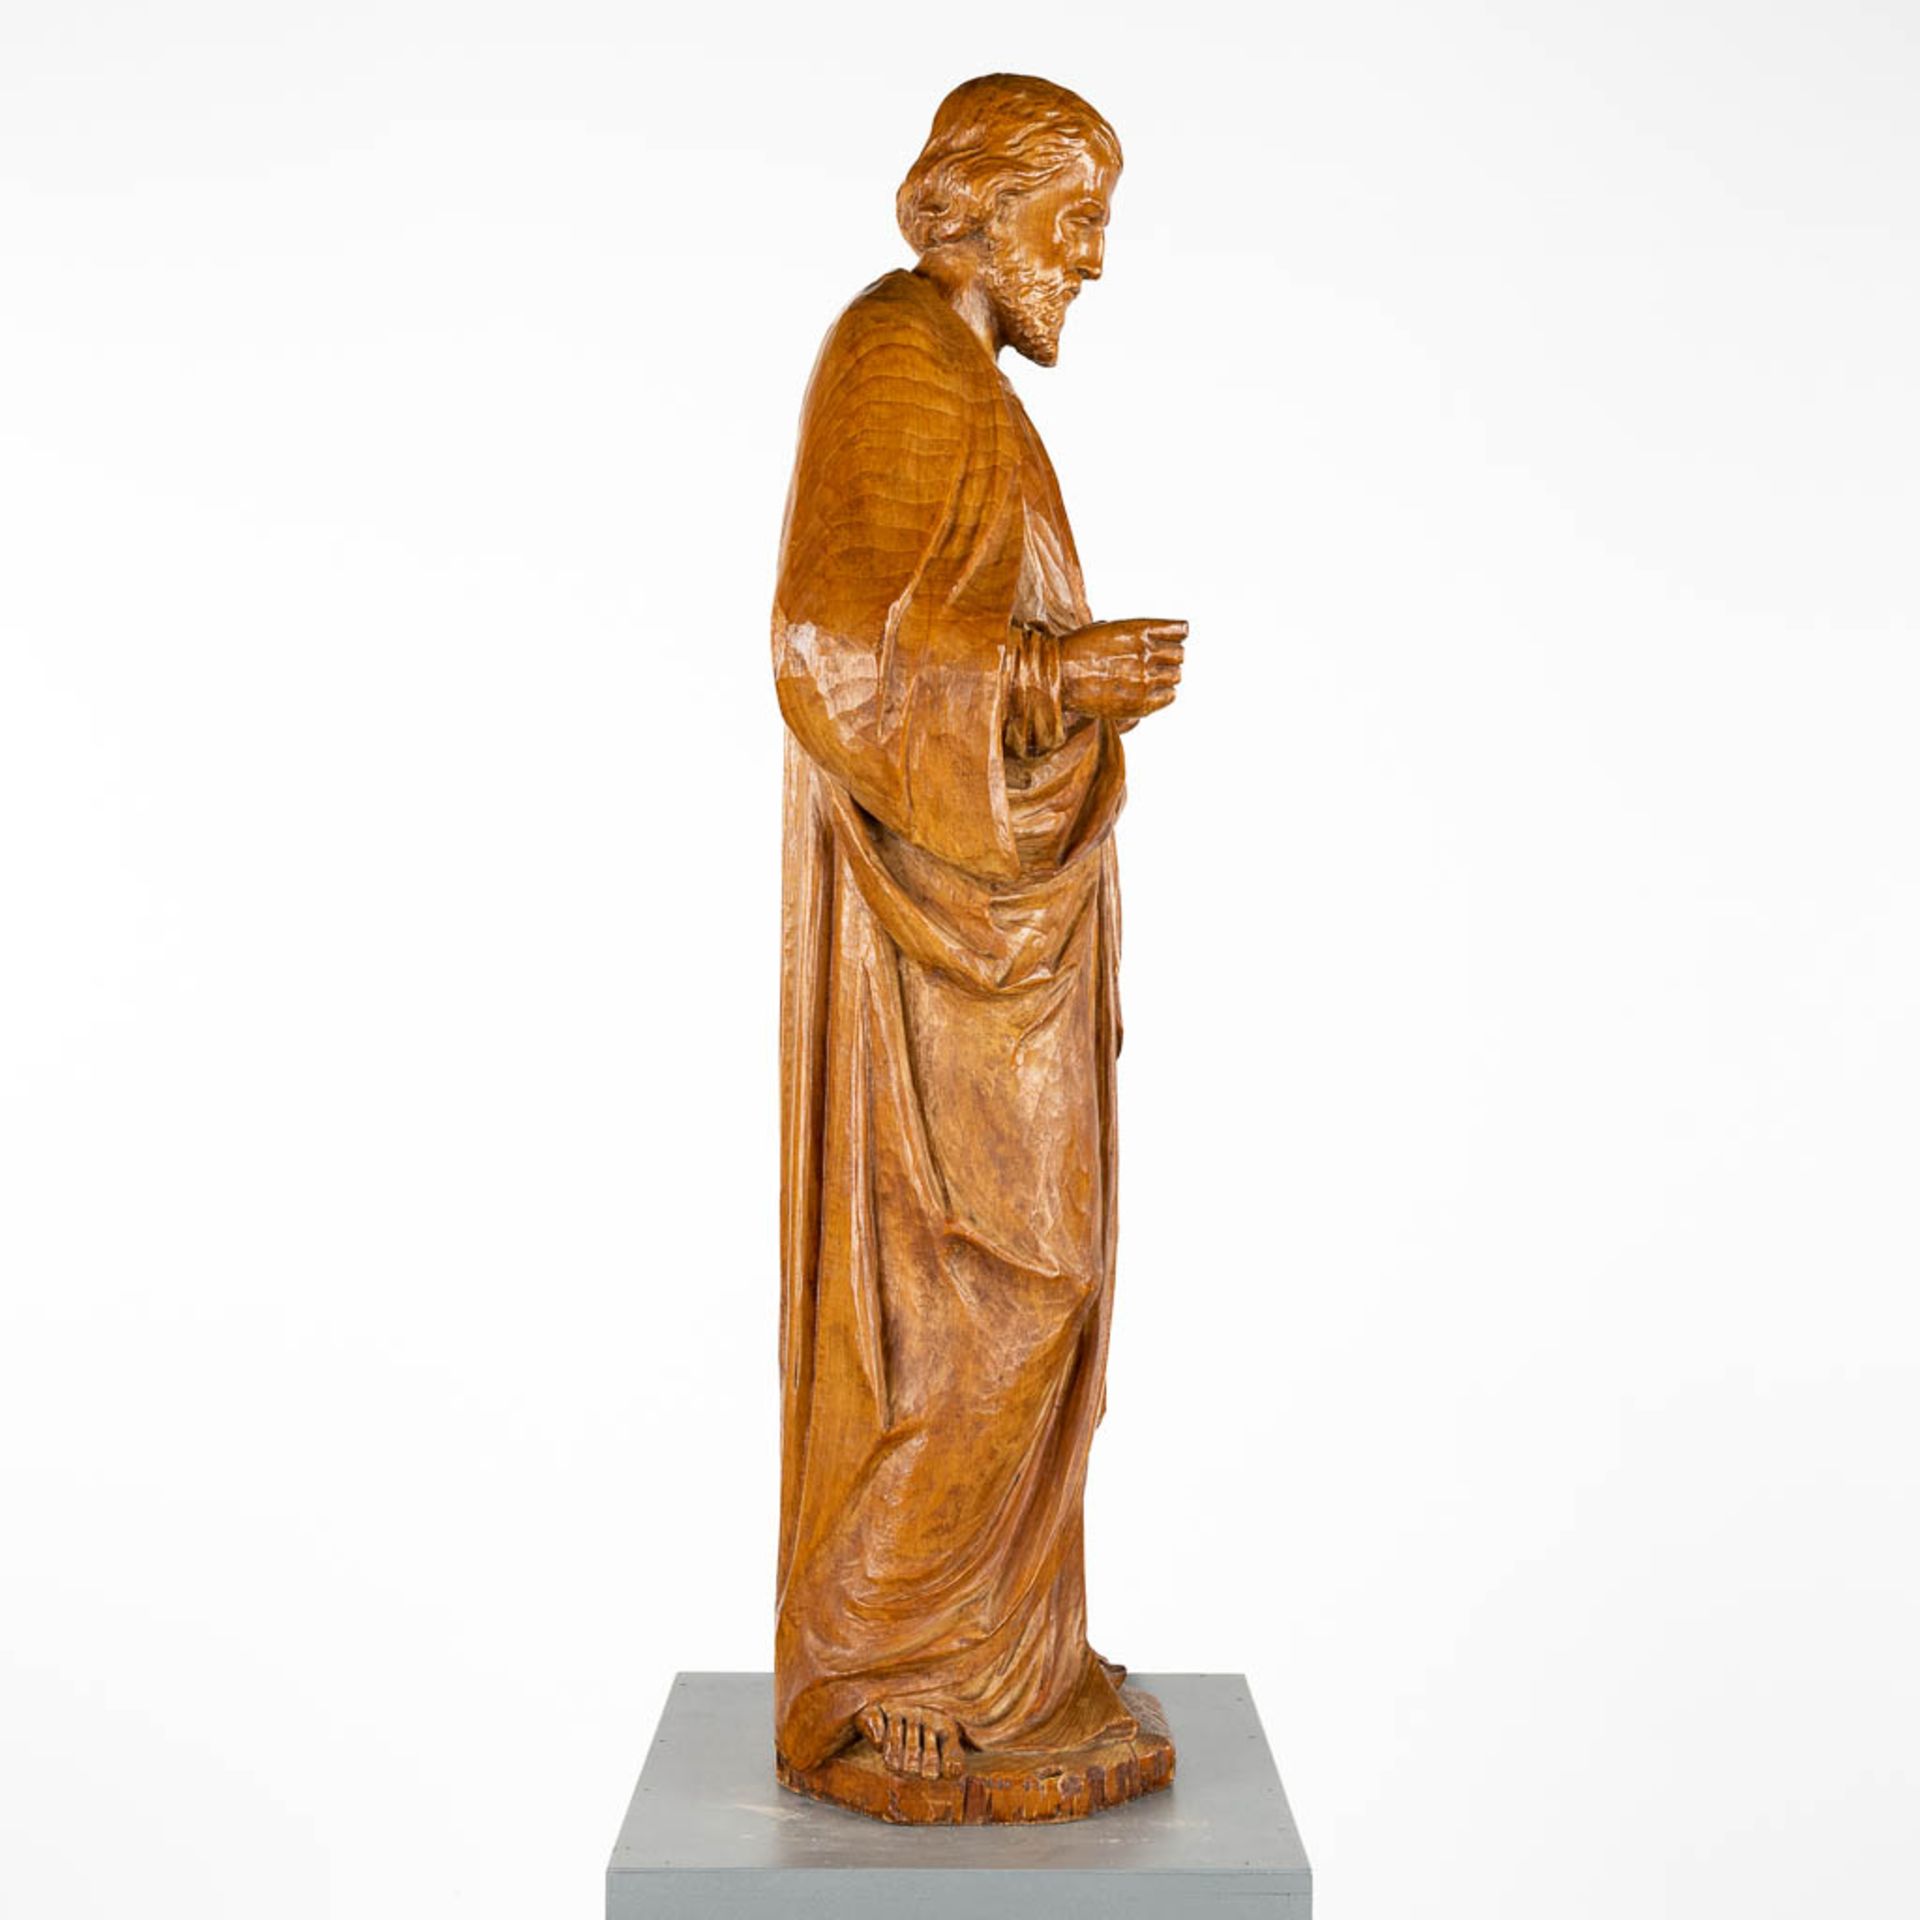 A large wood sculptured figurine of Joseph. 20th C. (D:27 x W:41 x H:120 cm) - Image 4 of 11